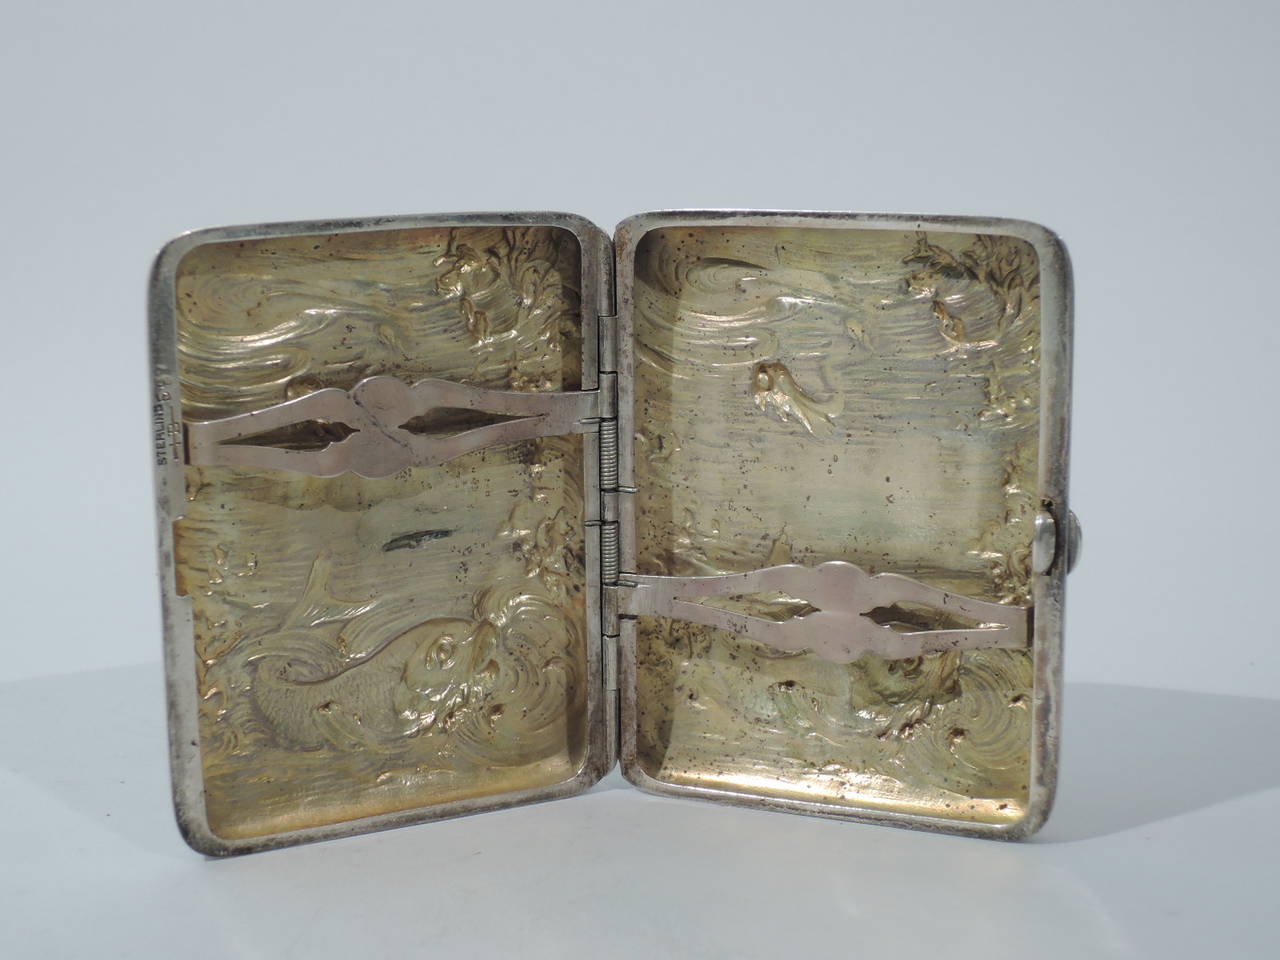 20th Century Art Nouveau Sterling Silver Cigarette Case with Marine Motif